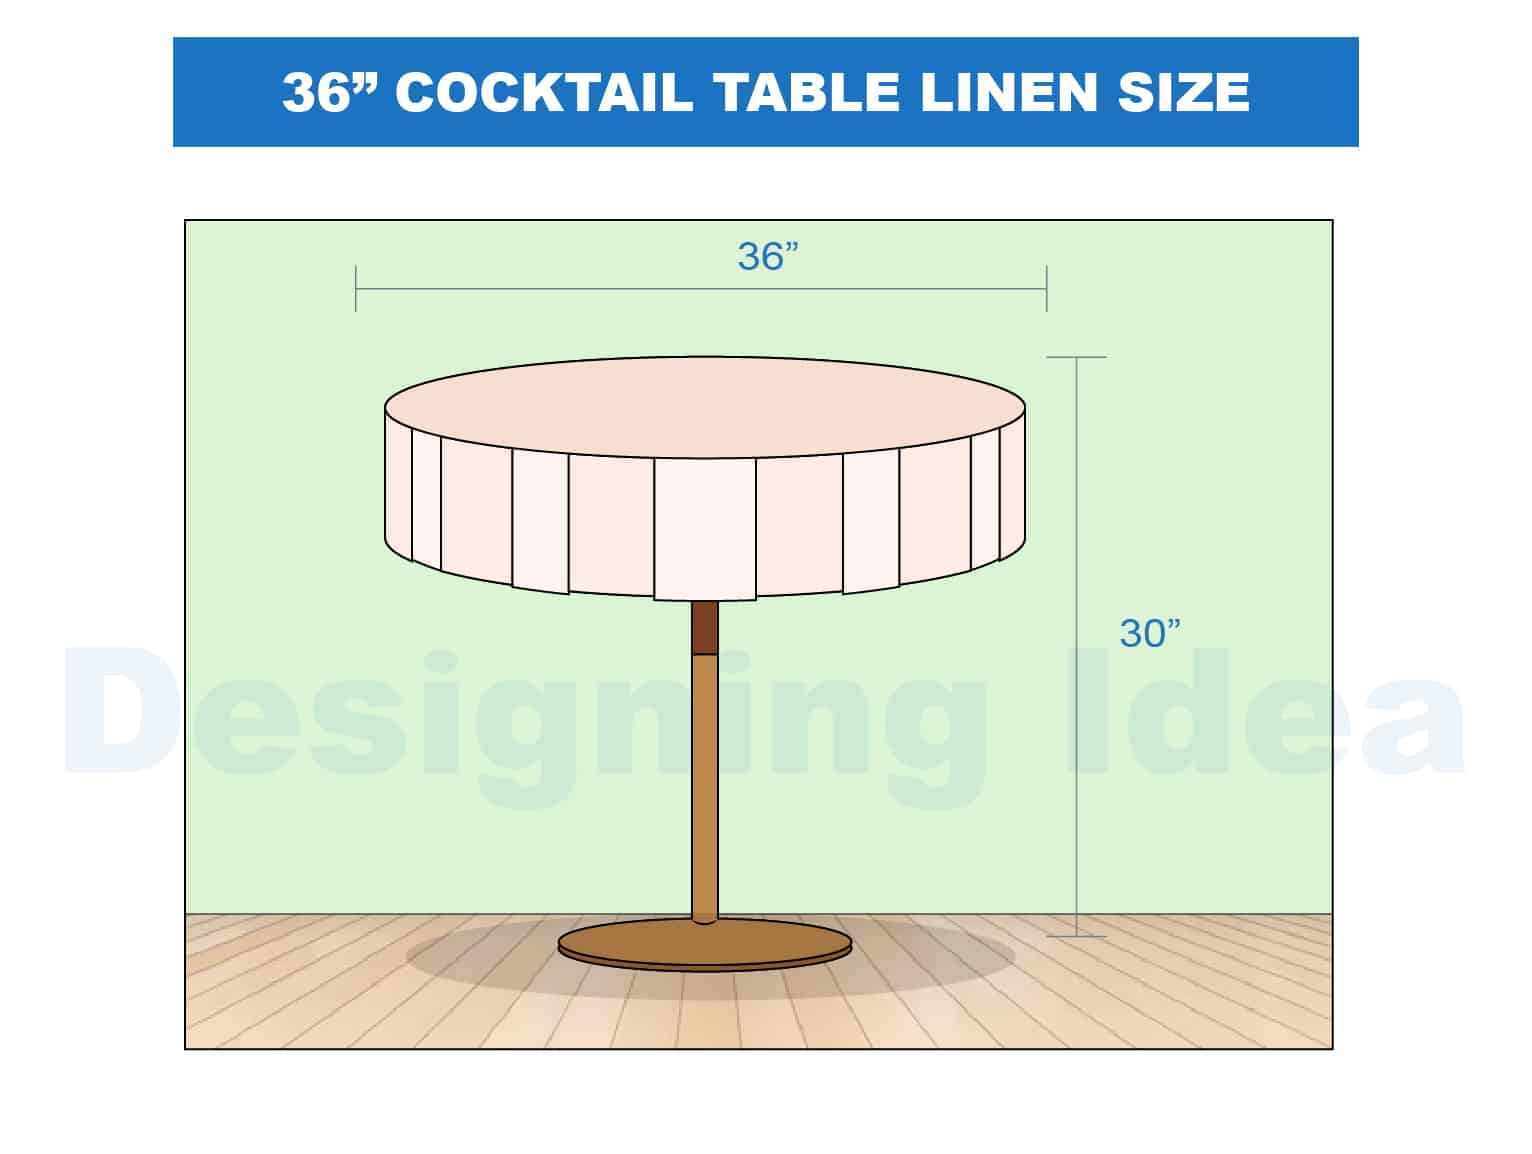 36” cocktail table linen size